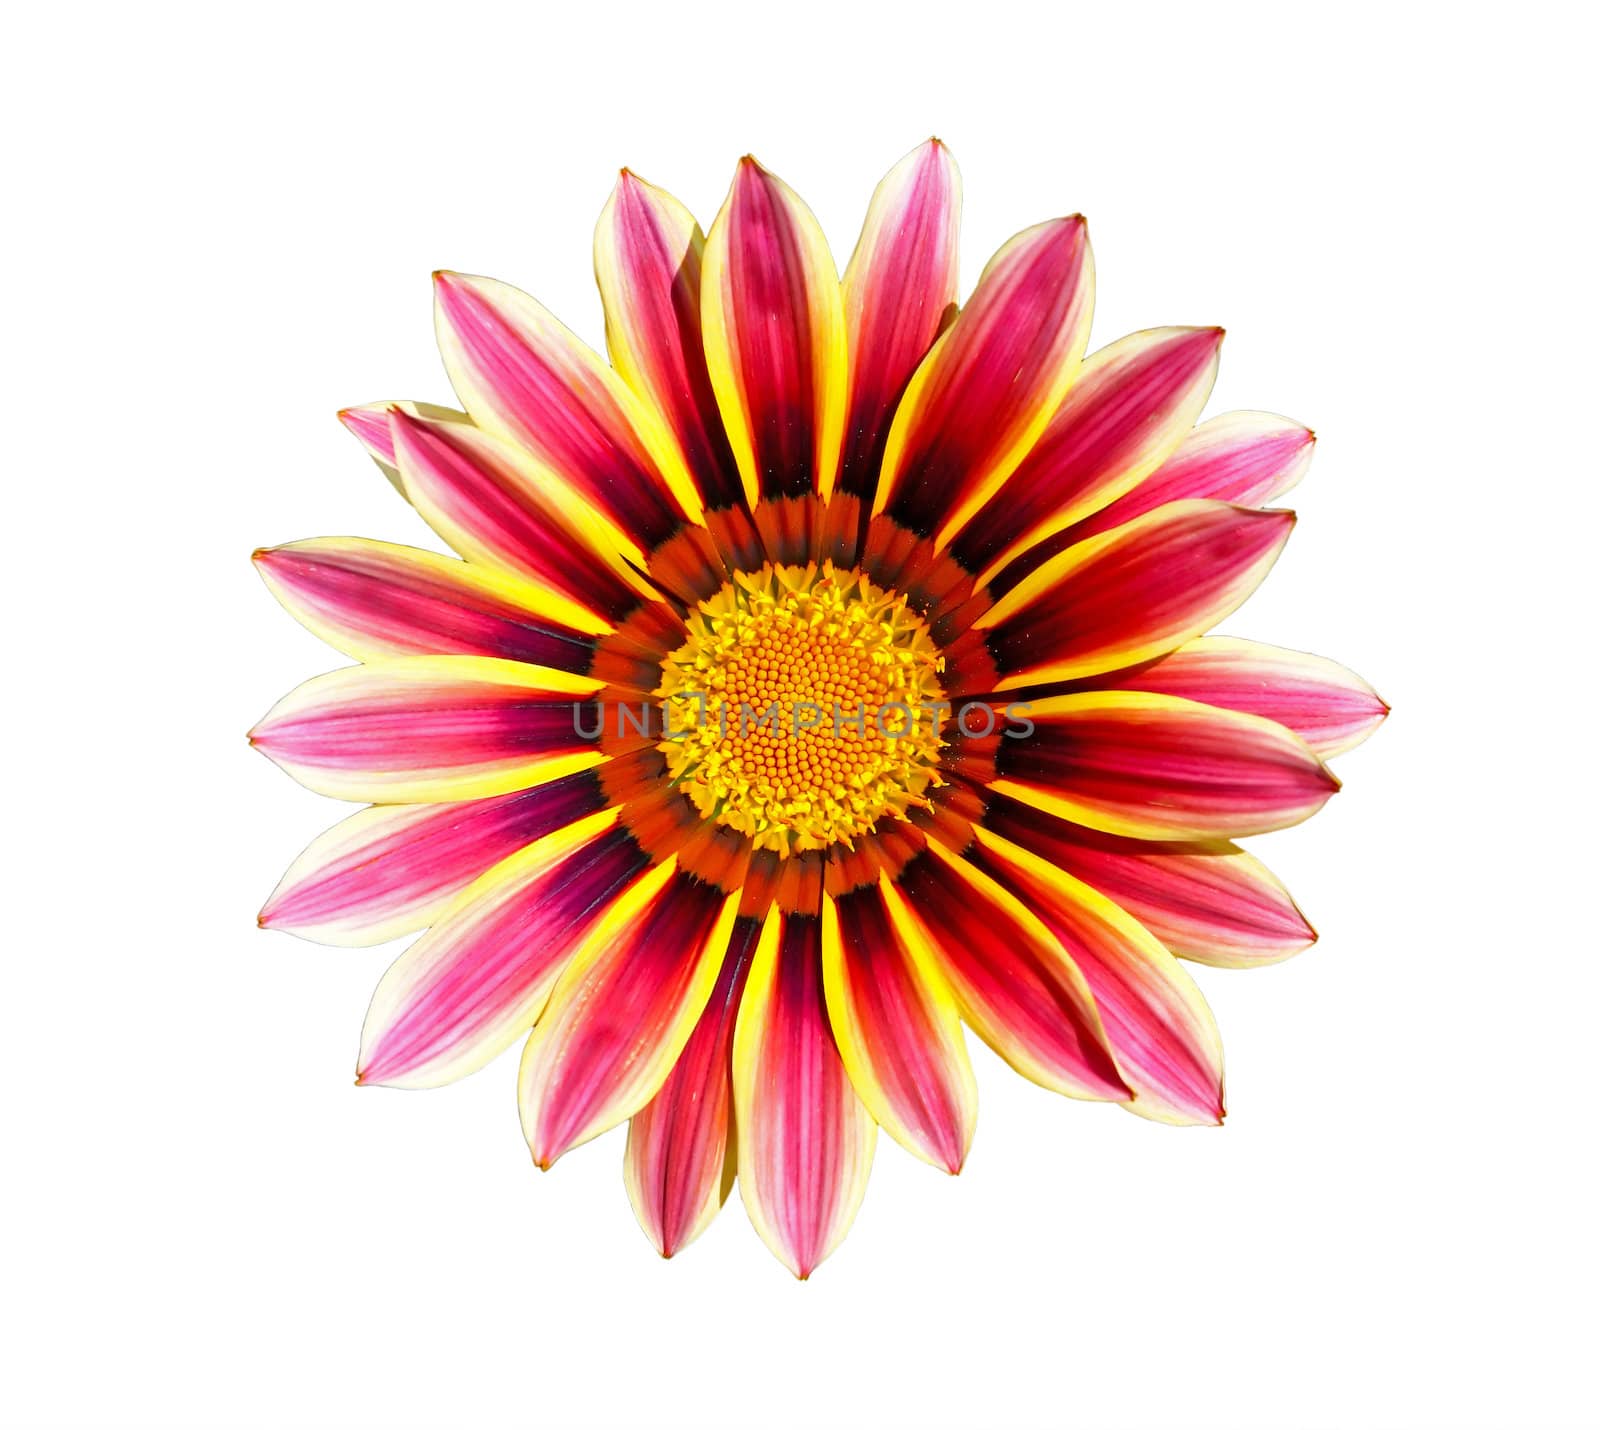 Flower of gazania, closeup, isolated on white